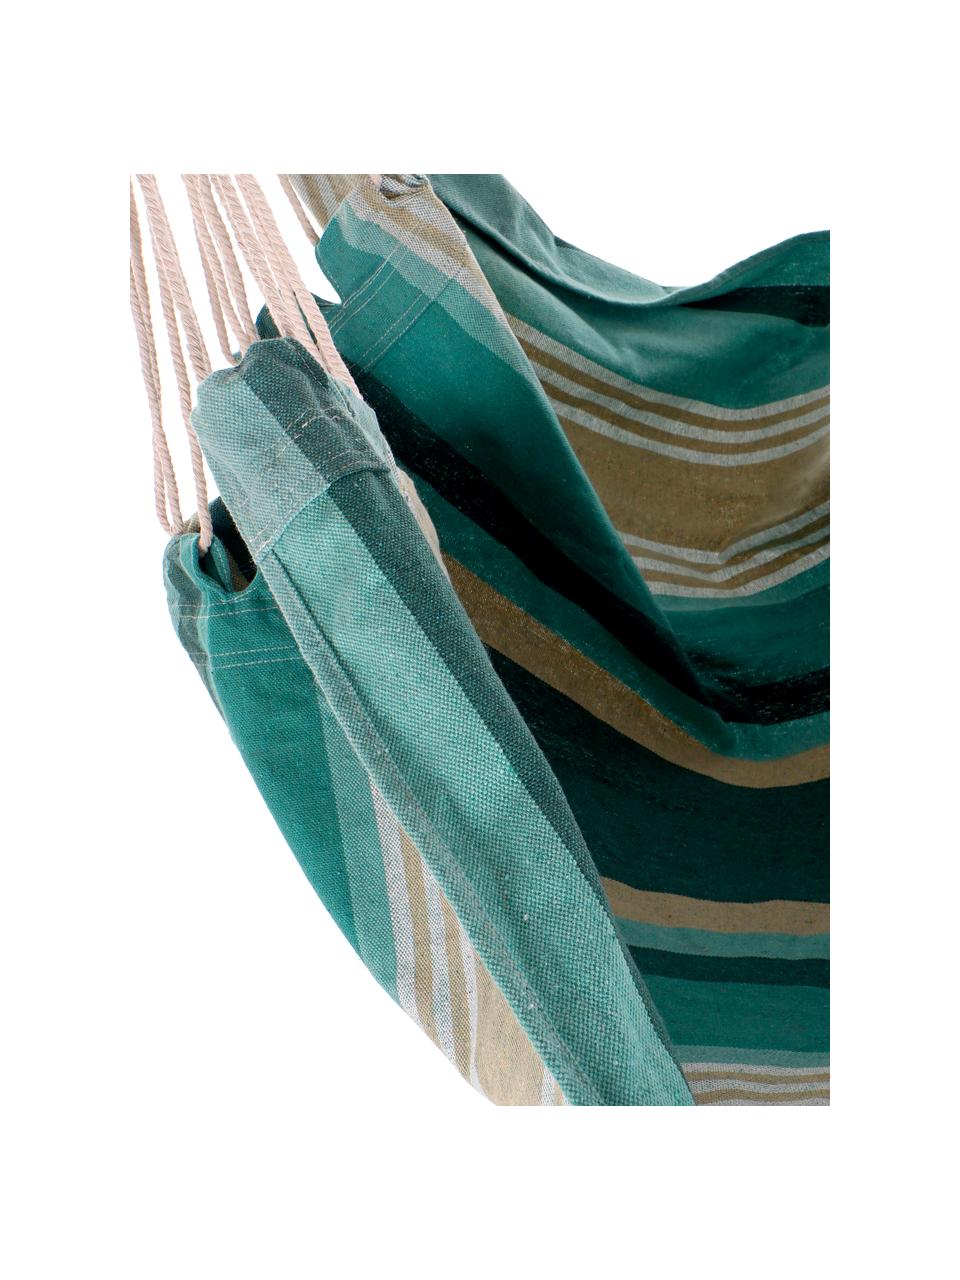 Silla colgante Pamut, Turquesa, multicolor, An 97 x Al 120 cm